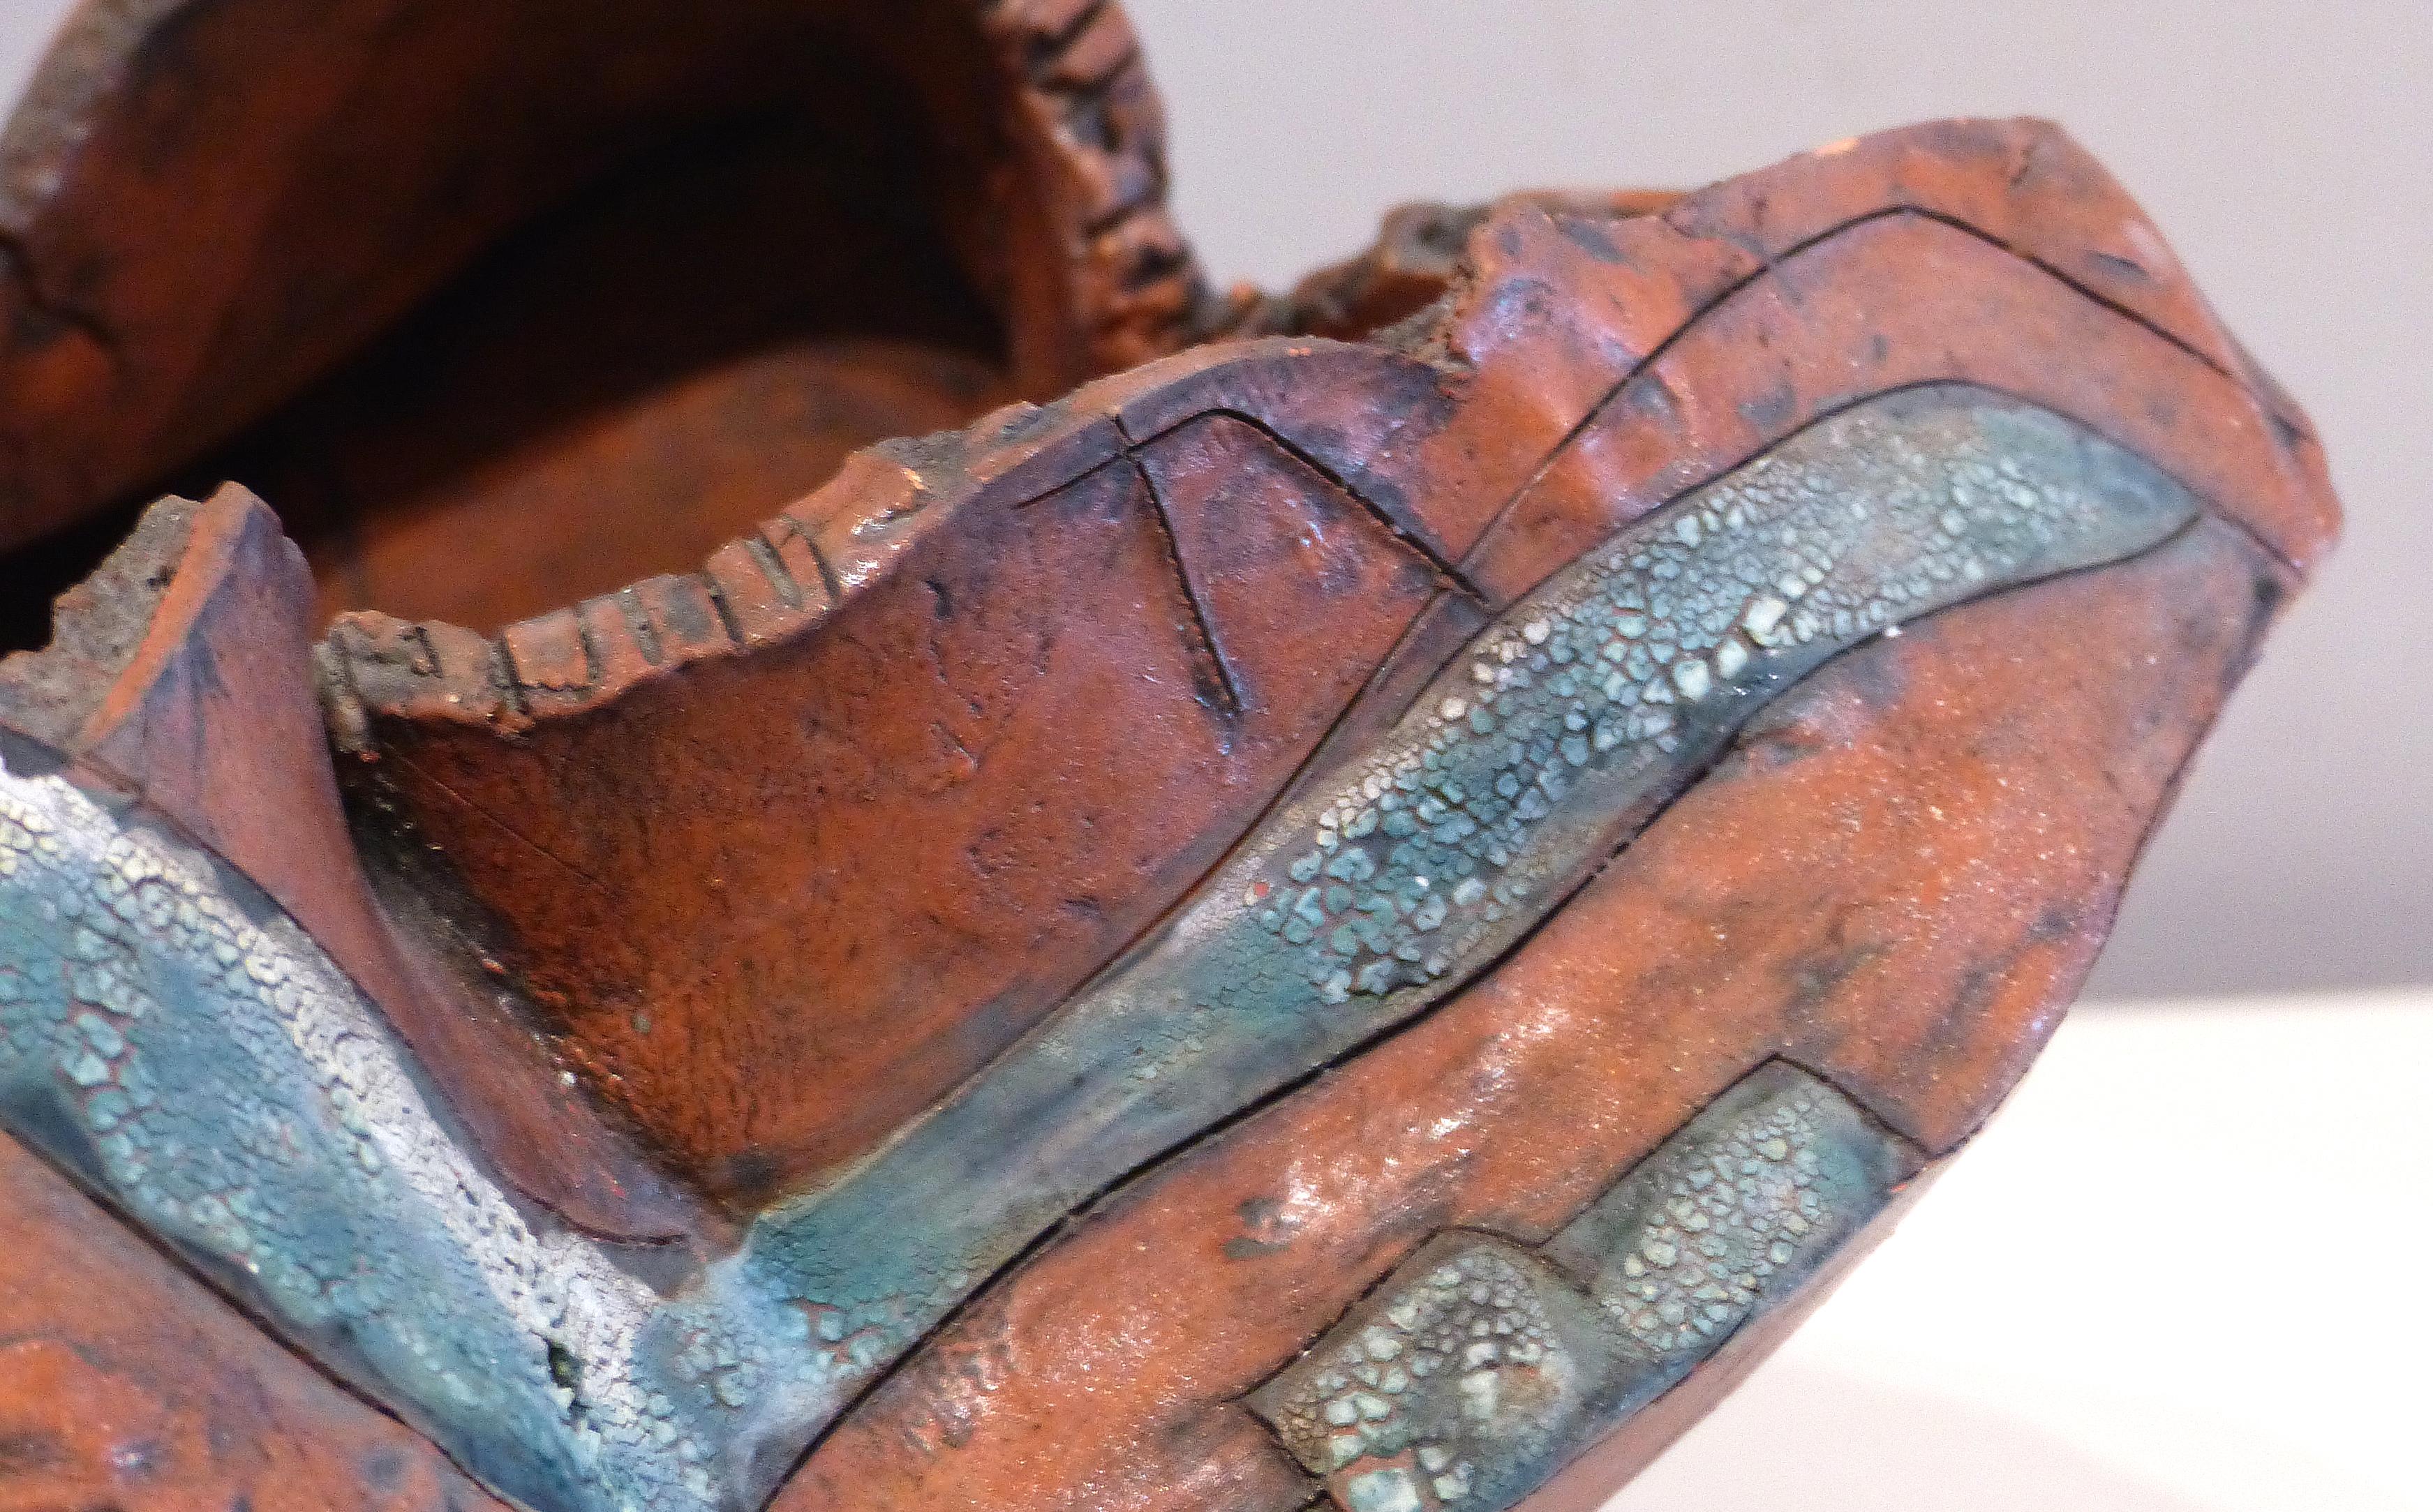 Brutalist Biomorphic Ceramic Pottery Vessel Sculpture, Hand-Built 1